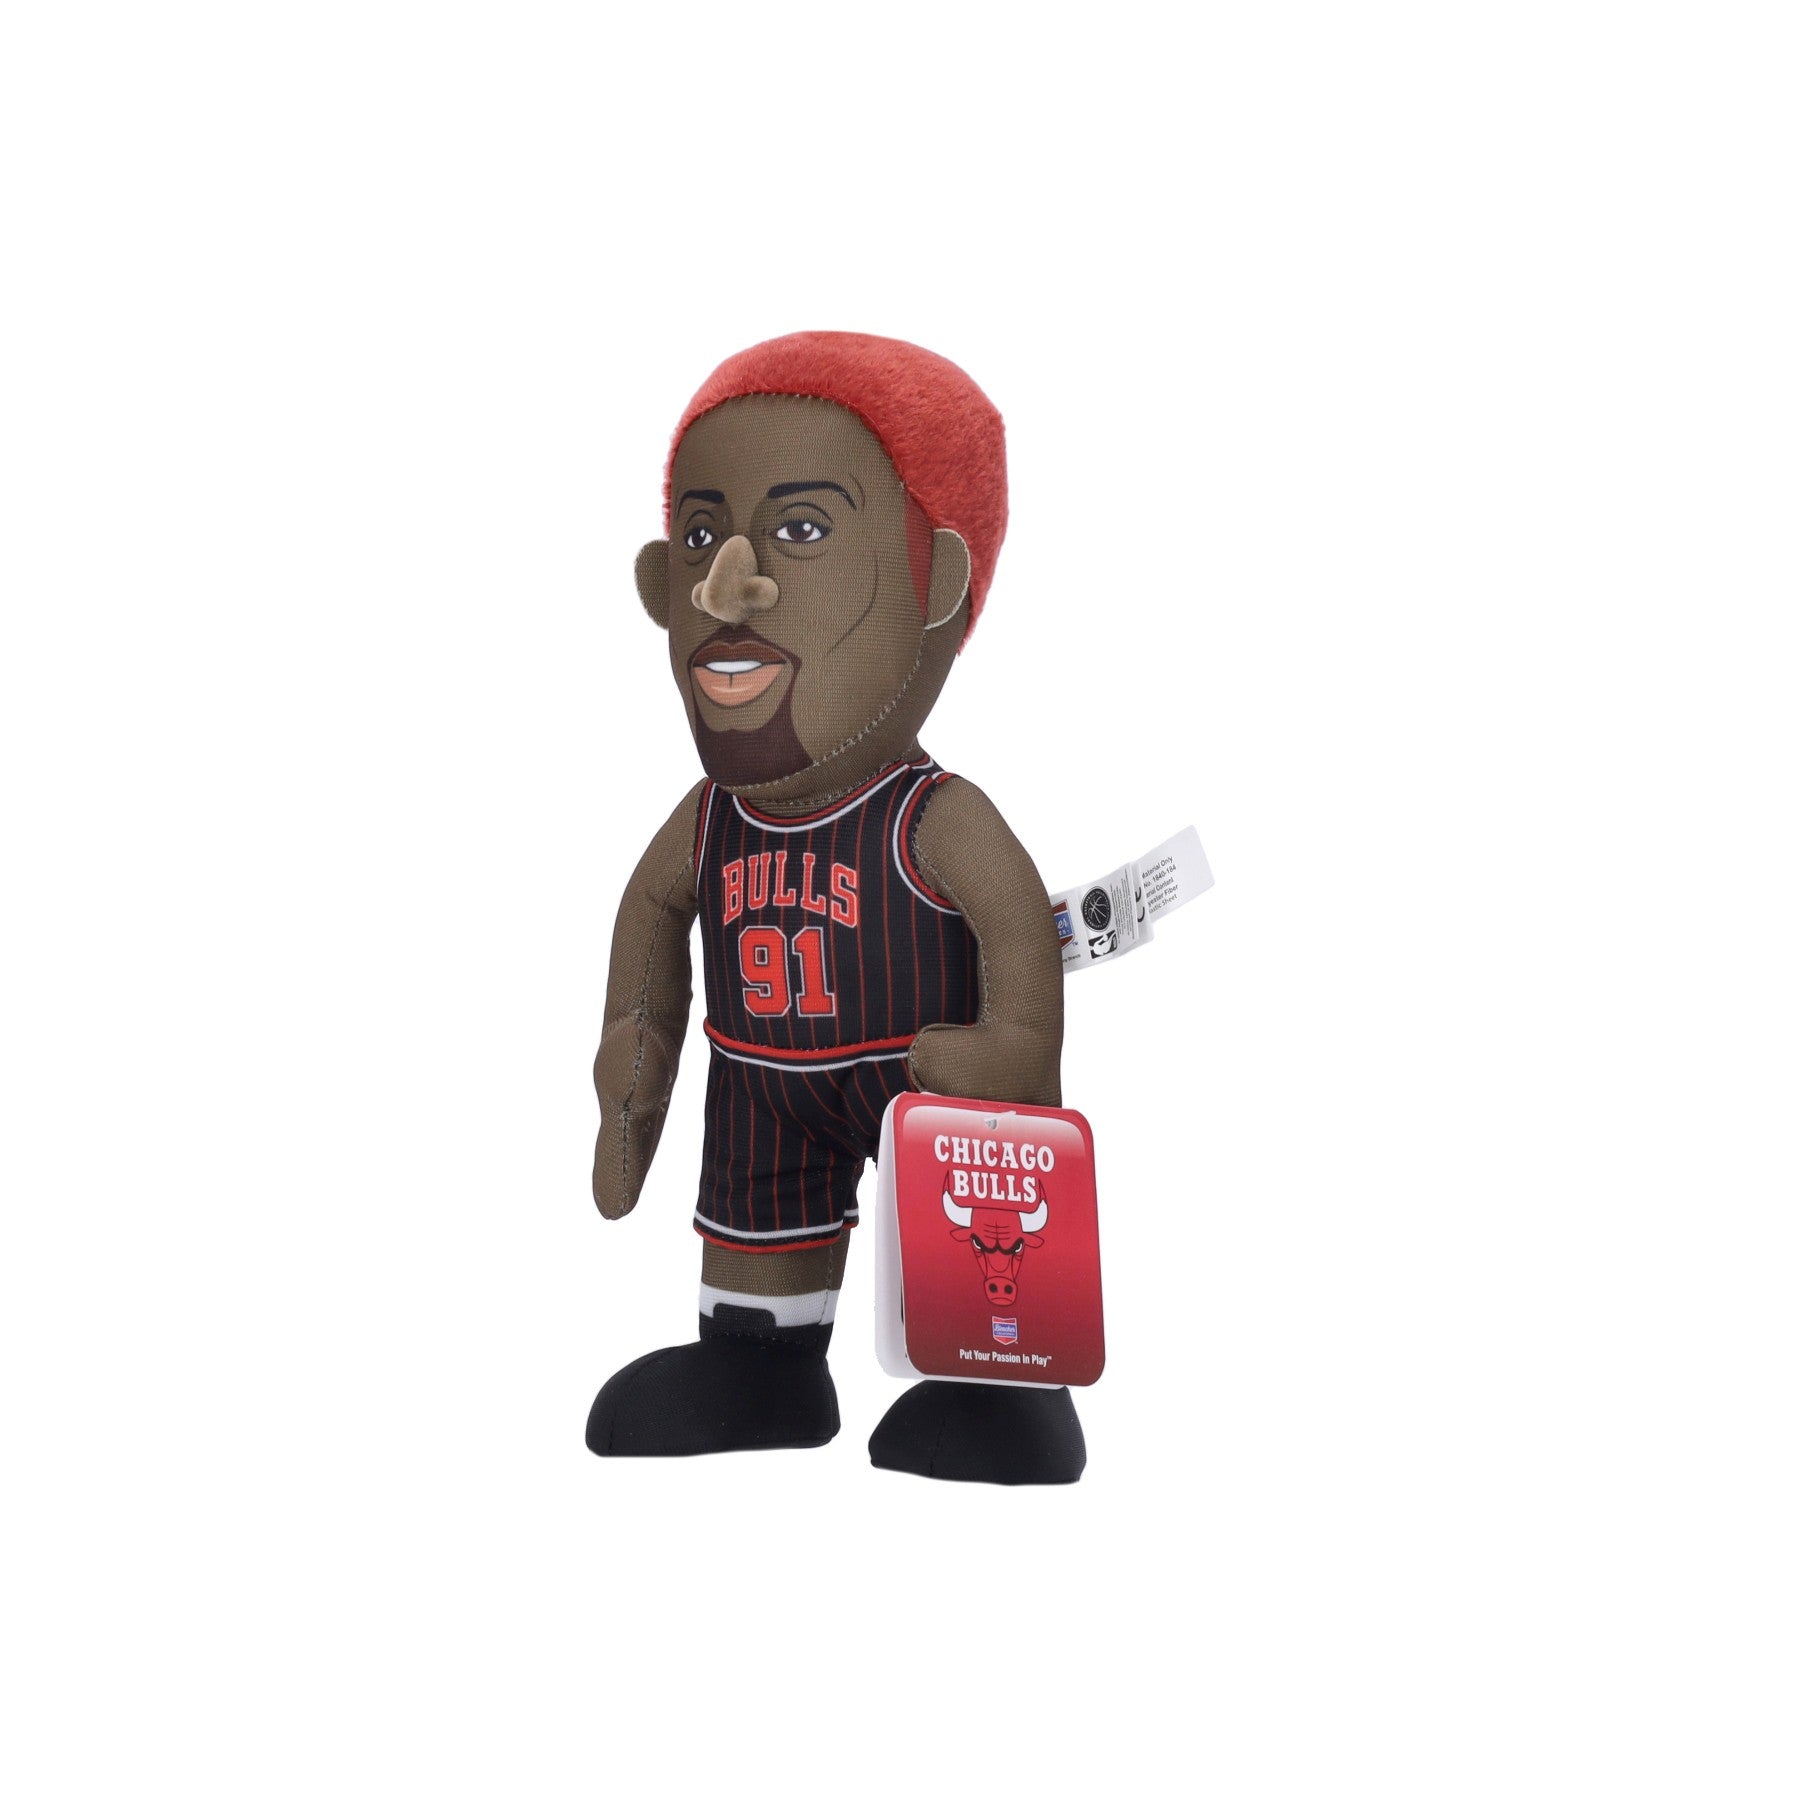 Men's NBA Plush No 91 Dennis Rodman Chibul Original Team Colors Figurine